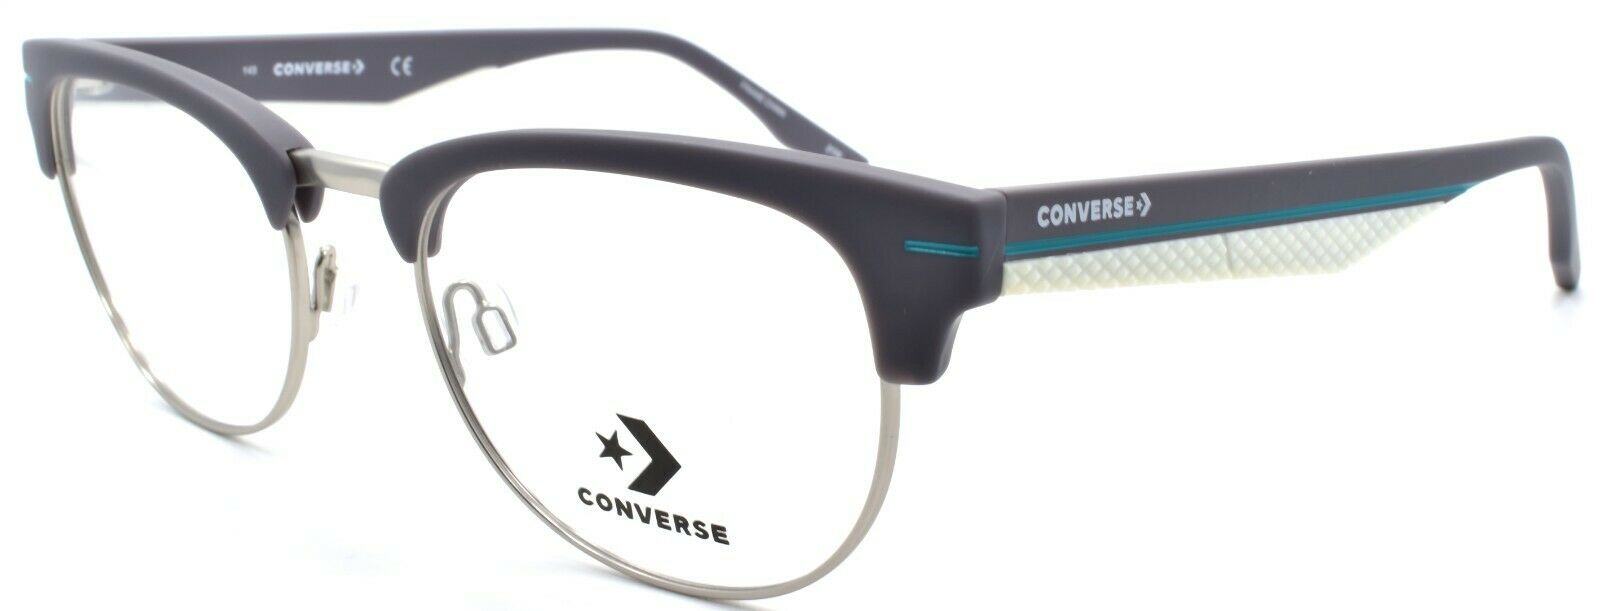 1-CONVERSE CV3006 020 Men's Eyeglasses Frames 52-20-145 Matte Light Carbon-886895508063-IKSpecs